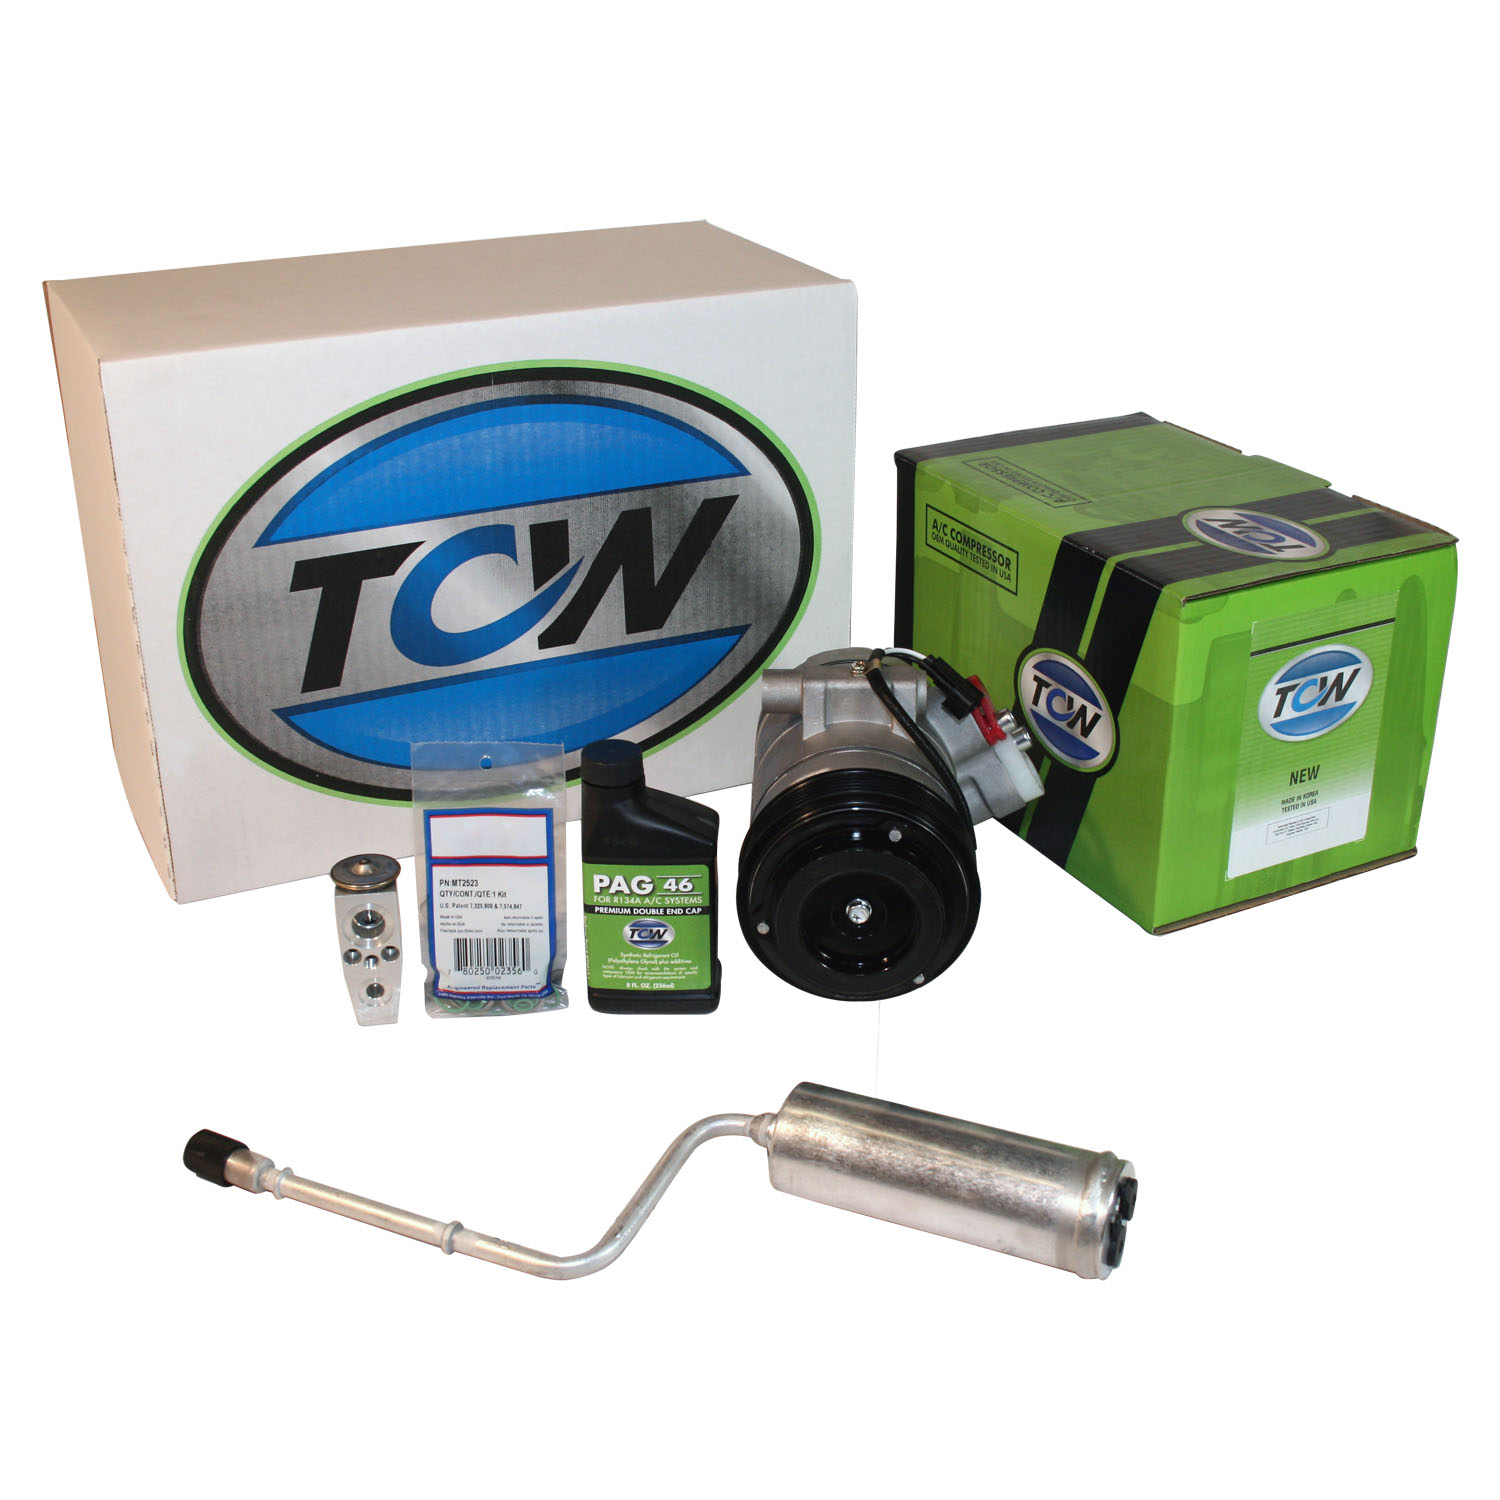 TCW Vehicle A/C Kit K1000446N New Product Image field_60b6a13a6e67c